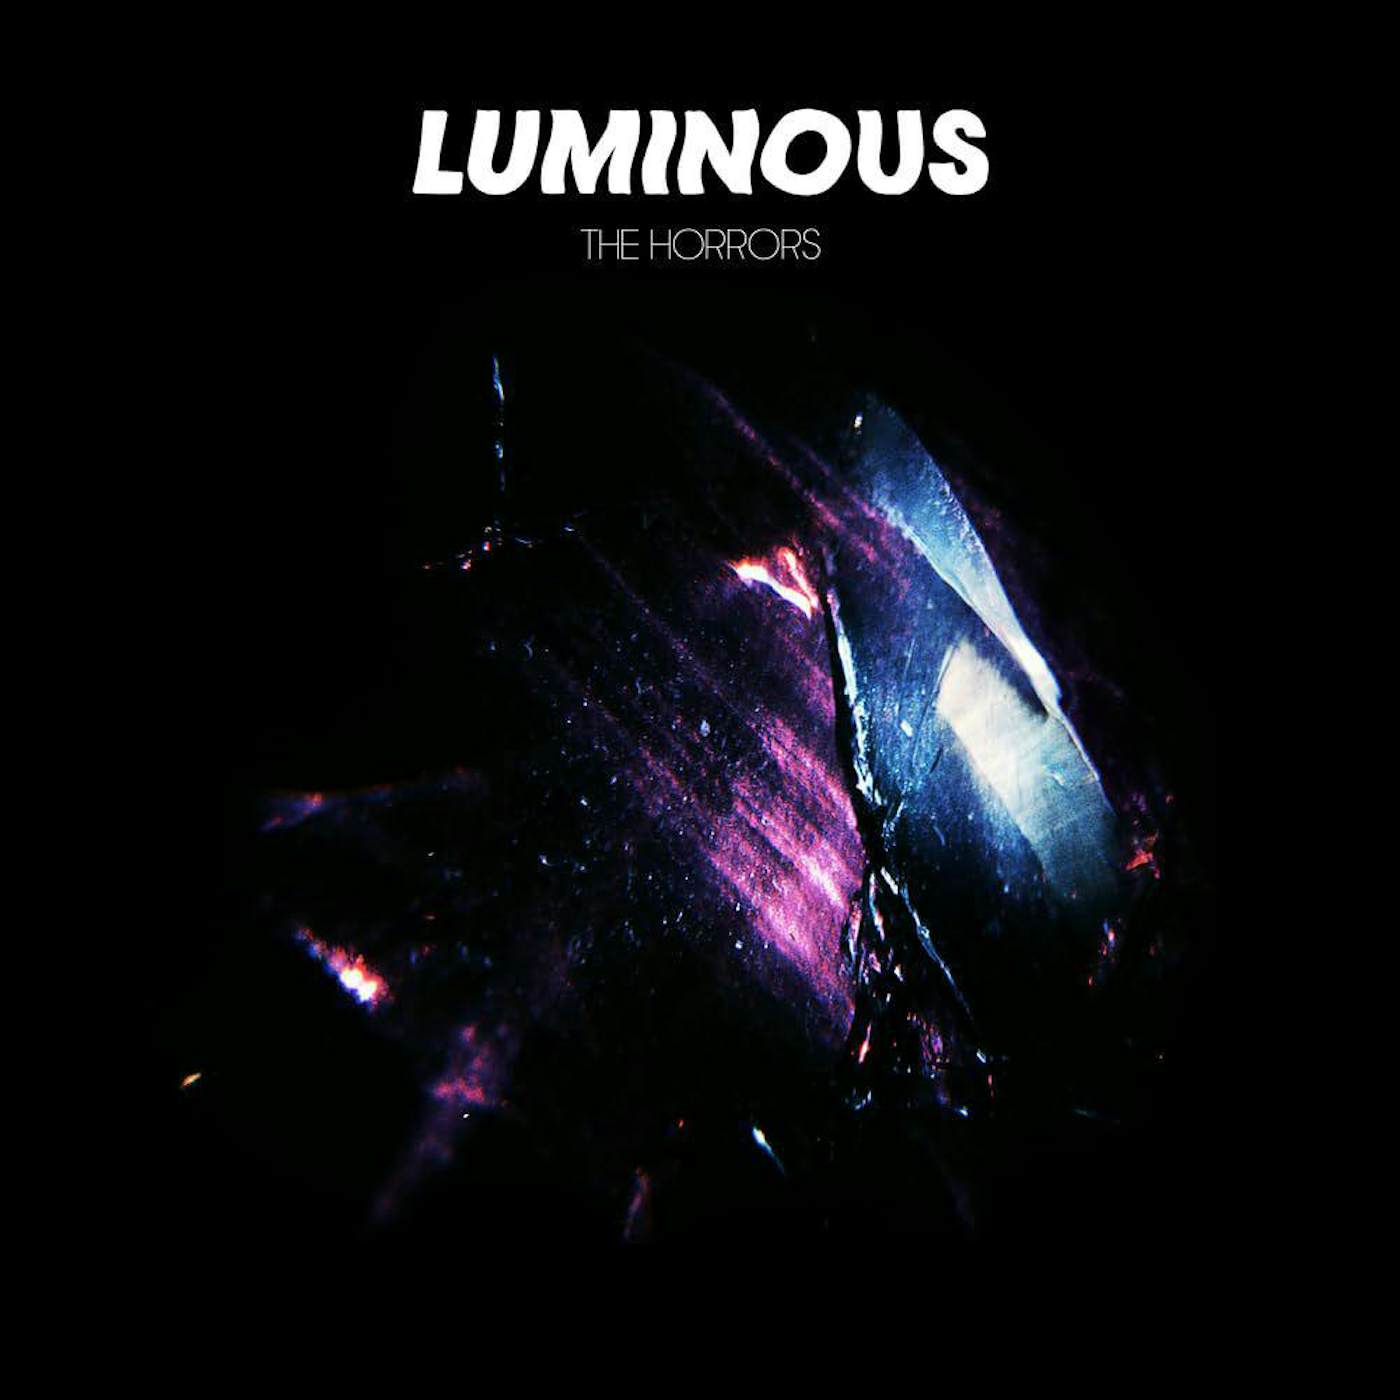 The Horrors Luminous Vinyl Record